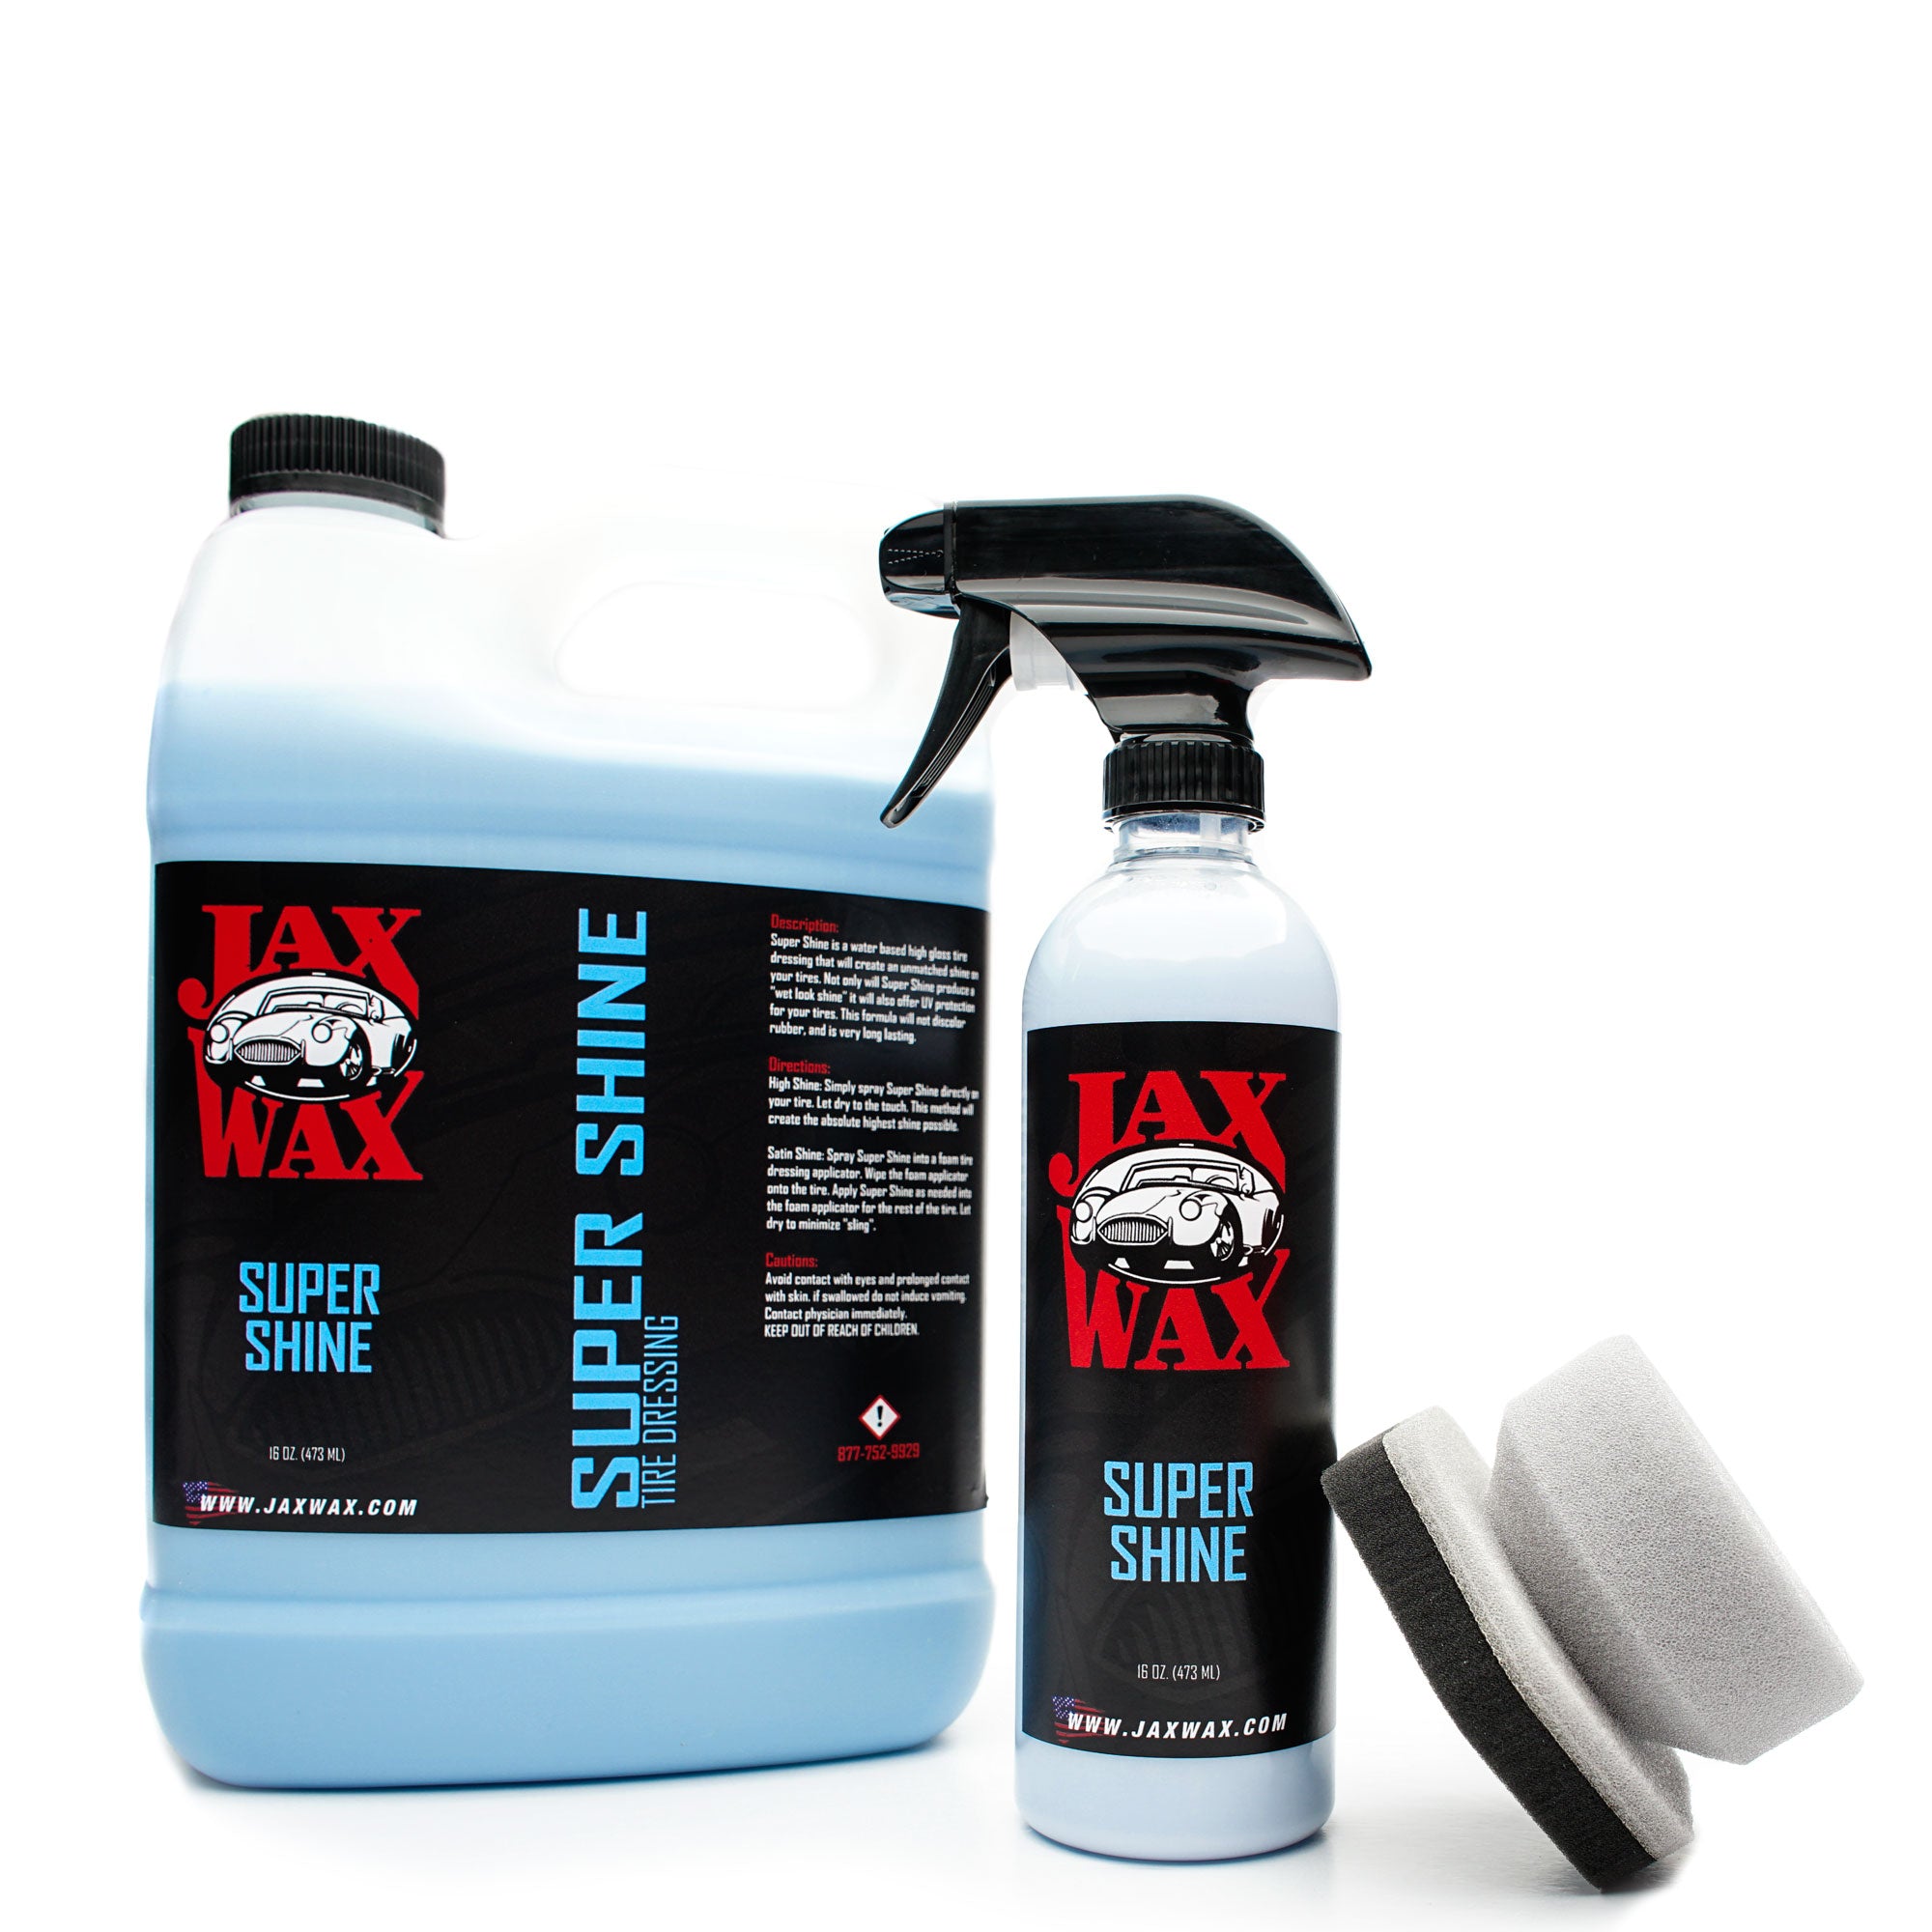 Jax Wax Super Shine Water Based Tire Dressing